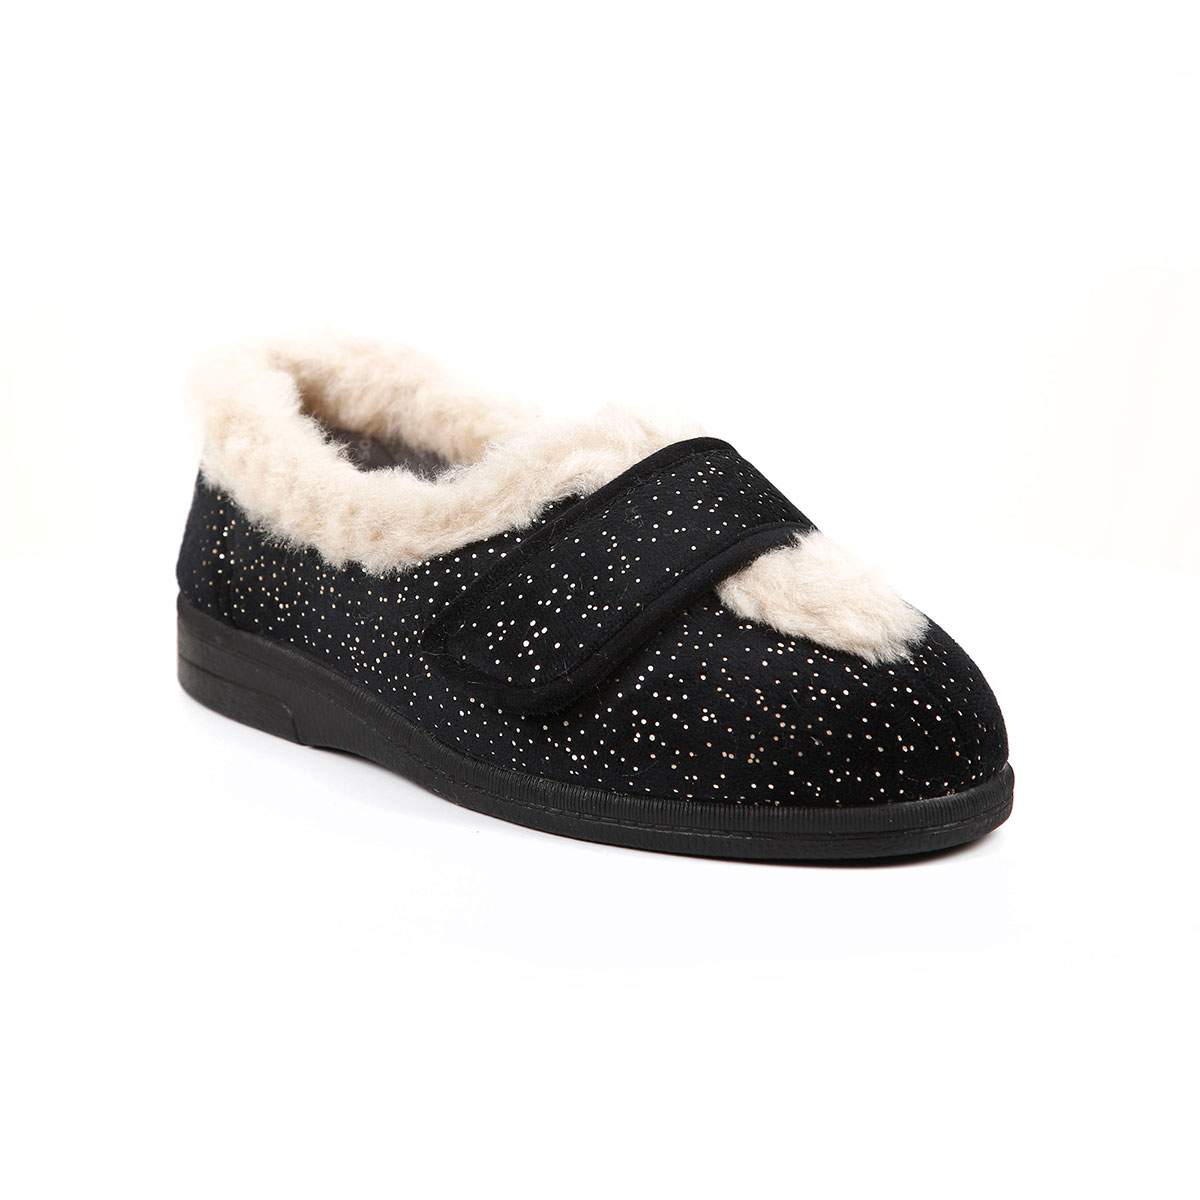 Black sparkly Selina slipper